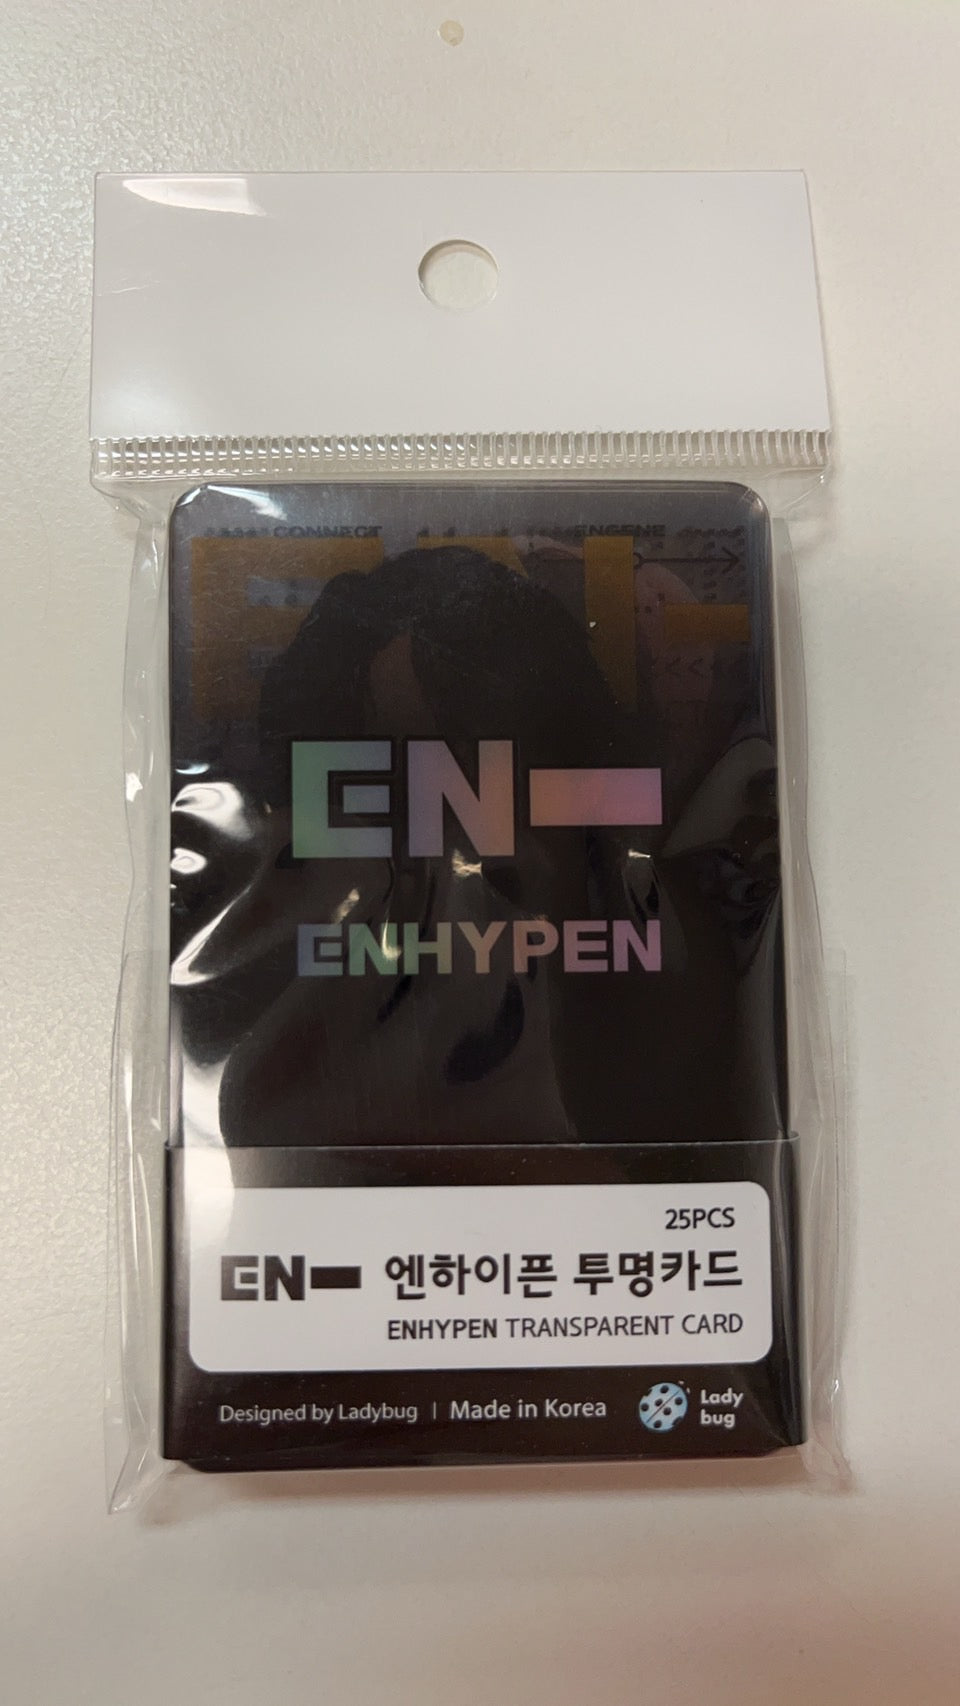 ENHYPEN TRANSPARENT CARD